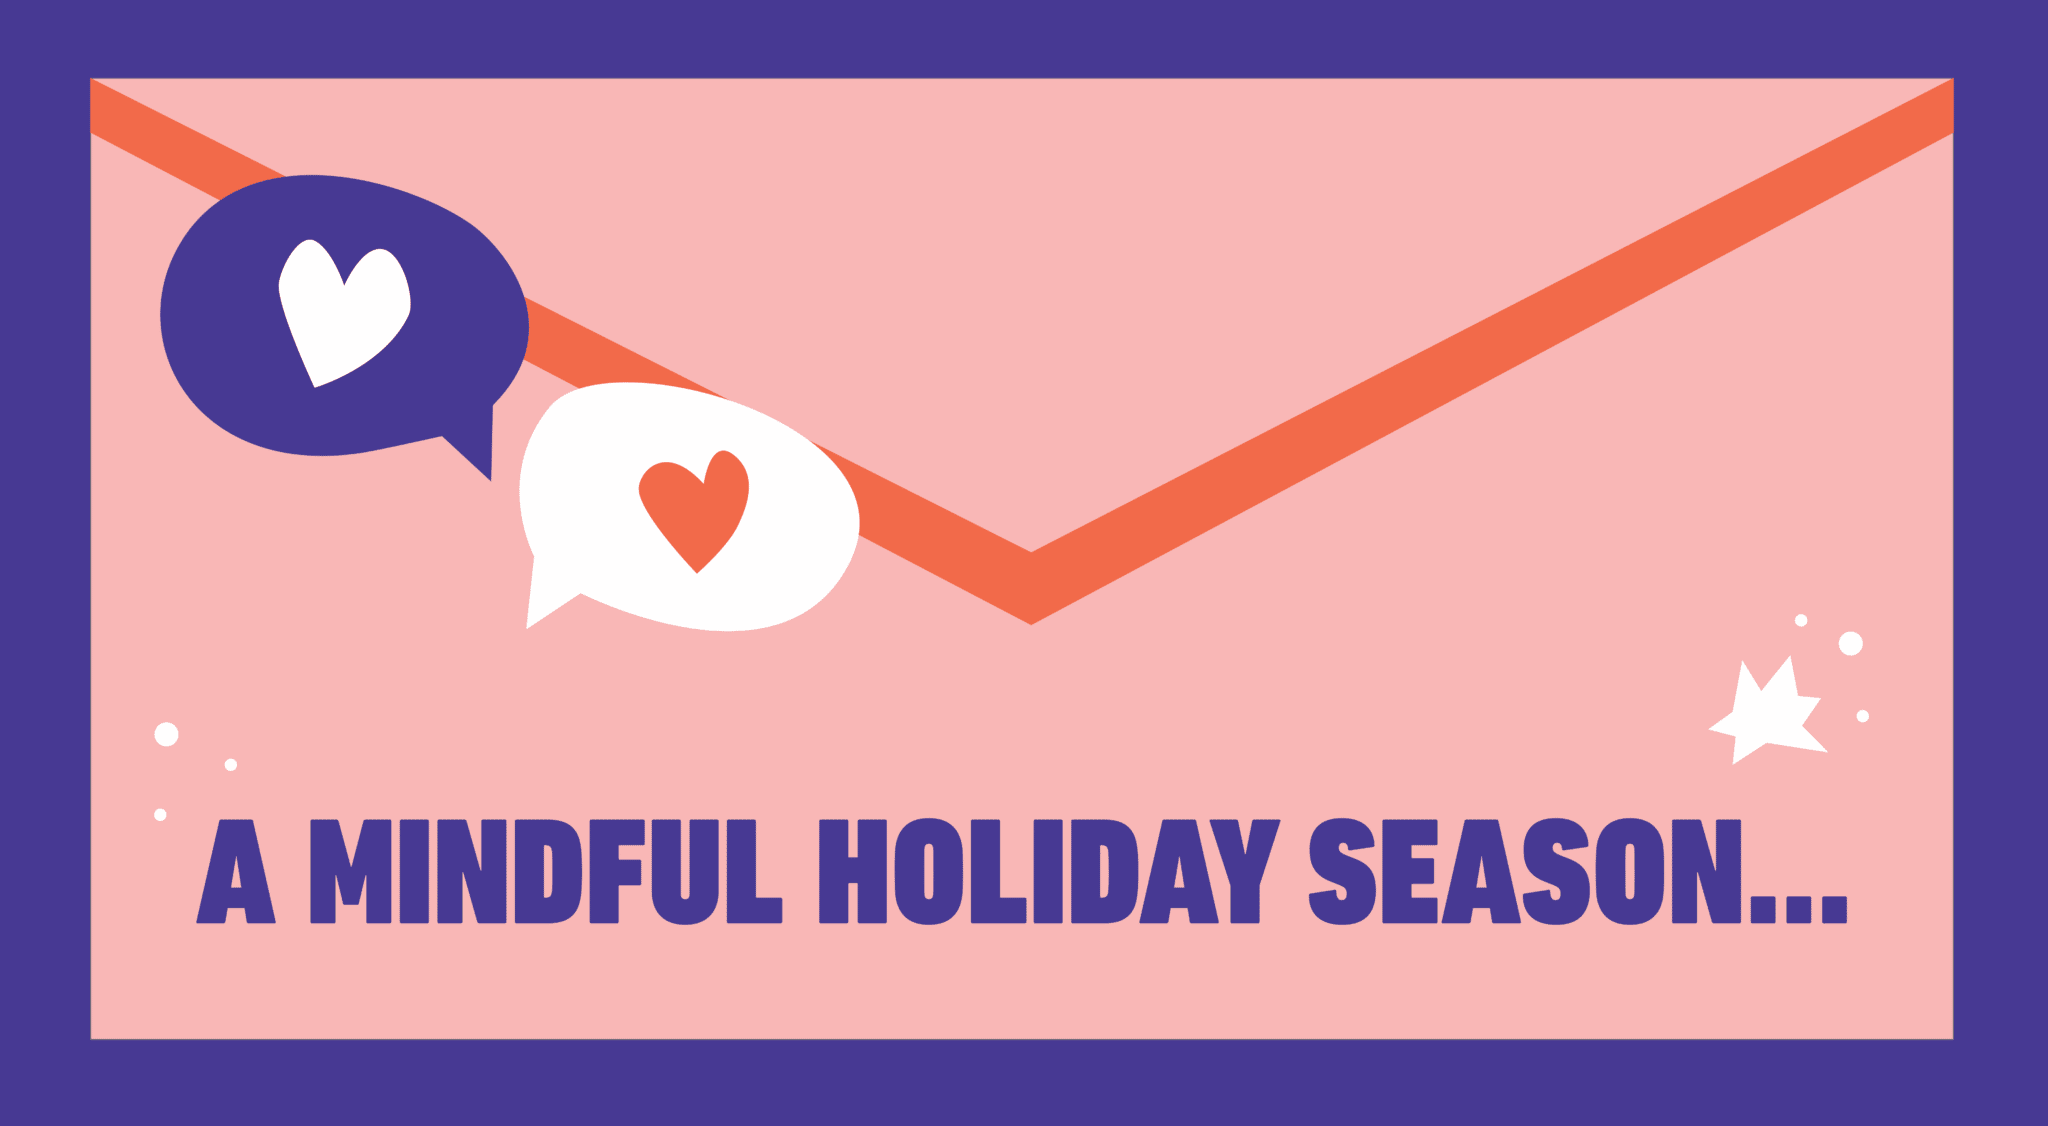 A postcard saying “A Mindful Holiday Season..."